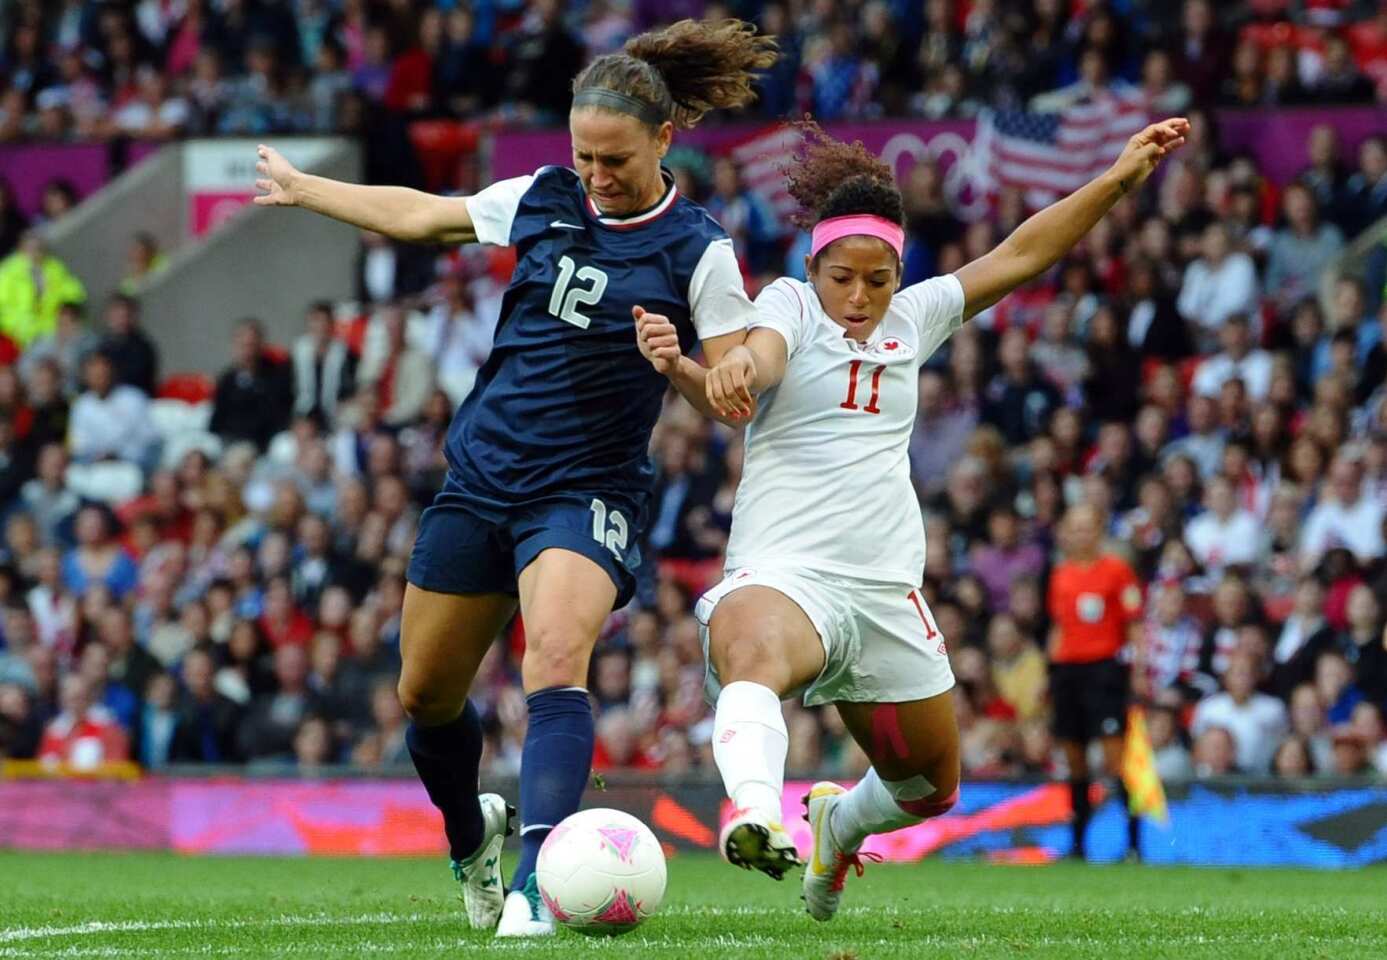 U.S. forward Lauren Cheney, left, is tackled by Canadian midfielder Desiree Scott.